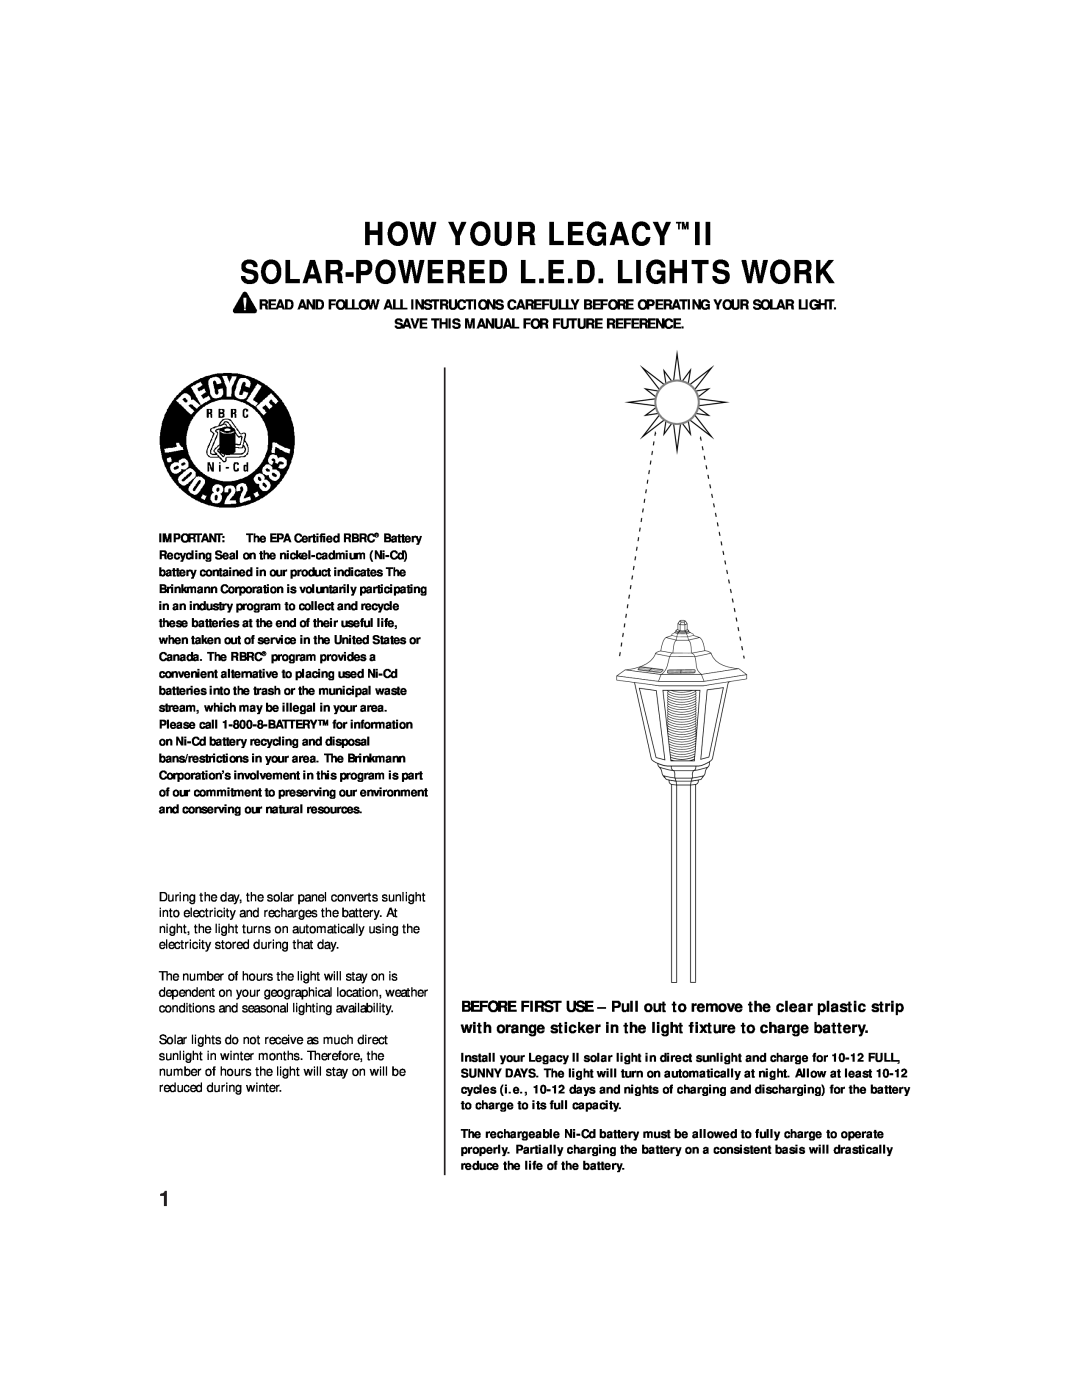 Brinkmann Solar Powered L.E.D. Garden Accent Light owner manual How Your Legacy Solar-Poweredl.E.D. Lights Work 